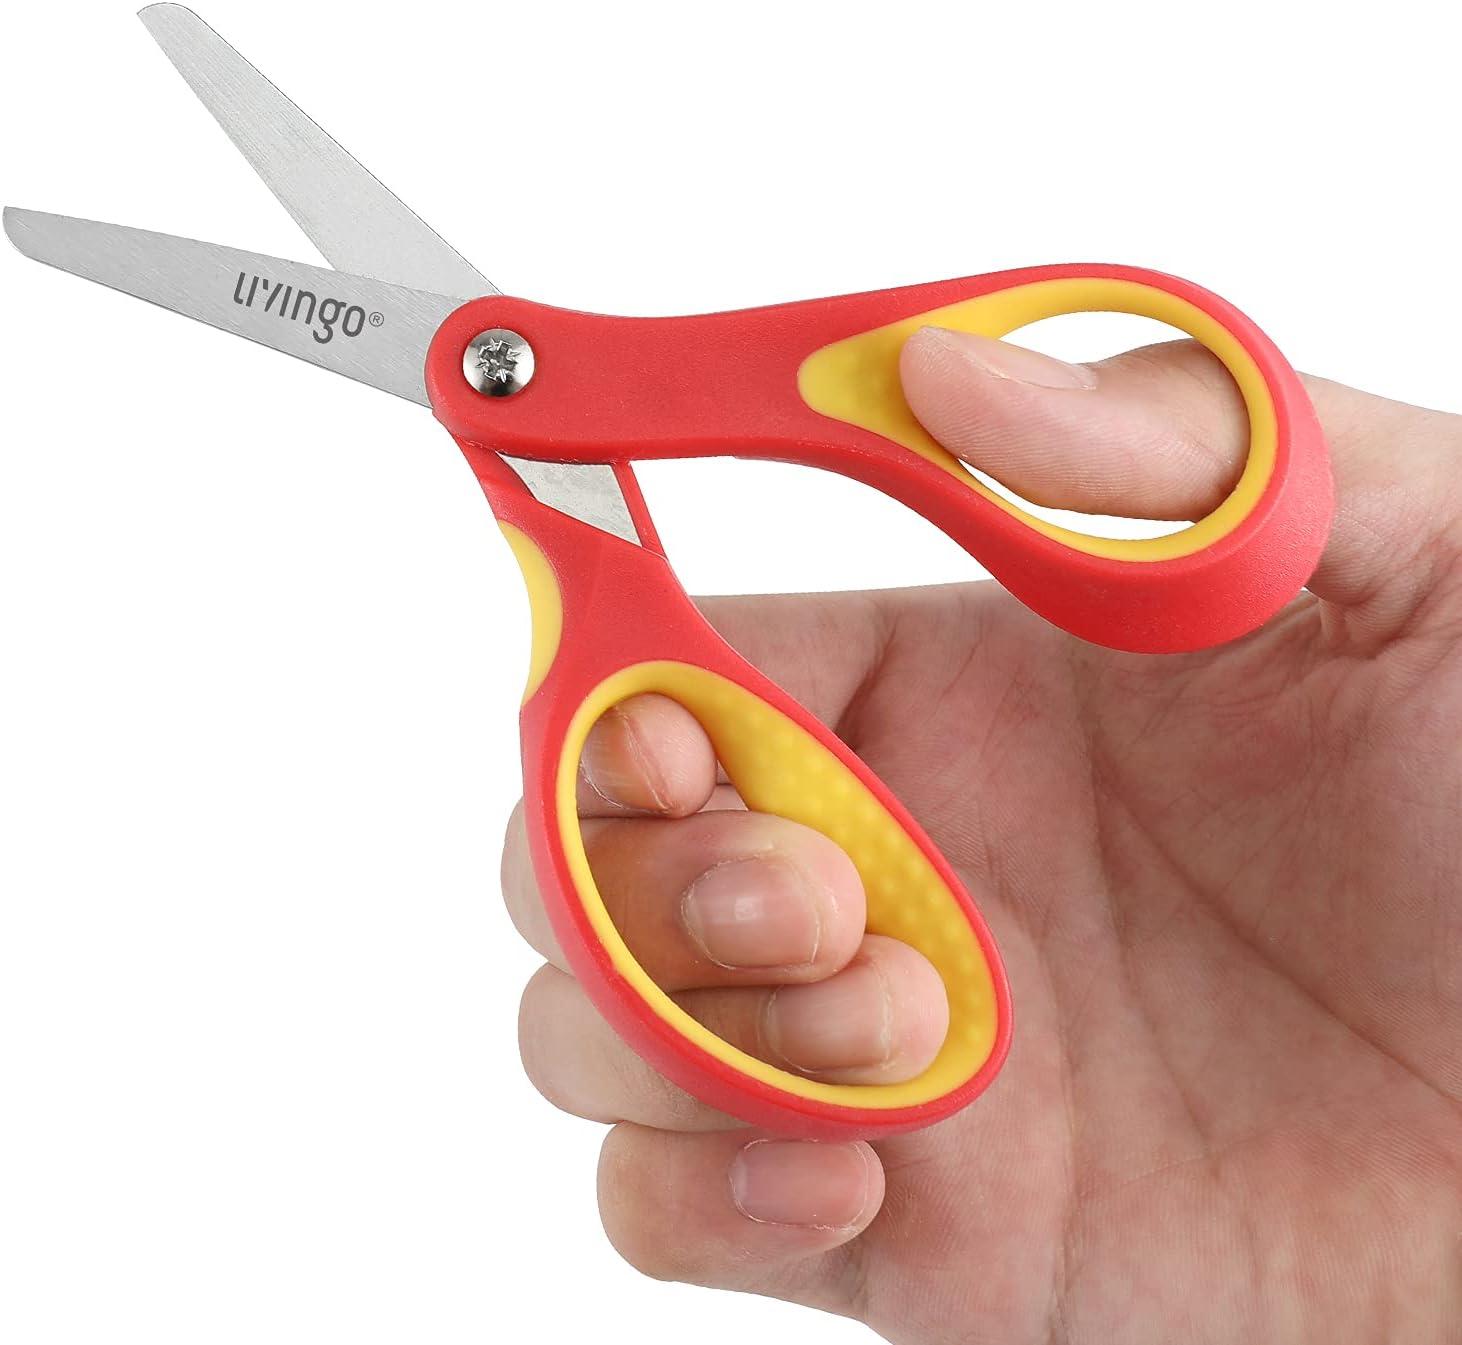 LIVINGO Left Handed Kids Scissors: Blunt Tip Safety Lefty Toddler Child  Scissors for School Craft Cutting Paper - 3 Pack 5 inches Comfort Grip  Green